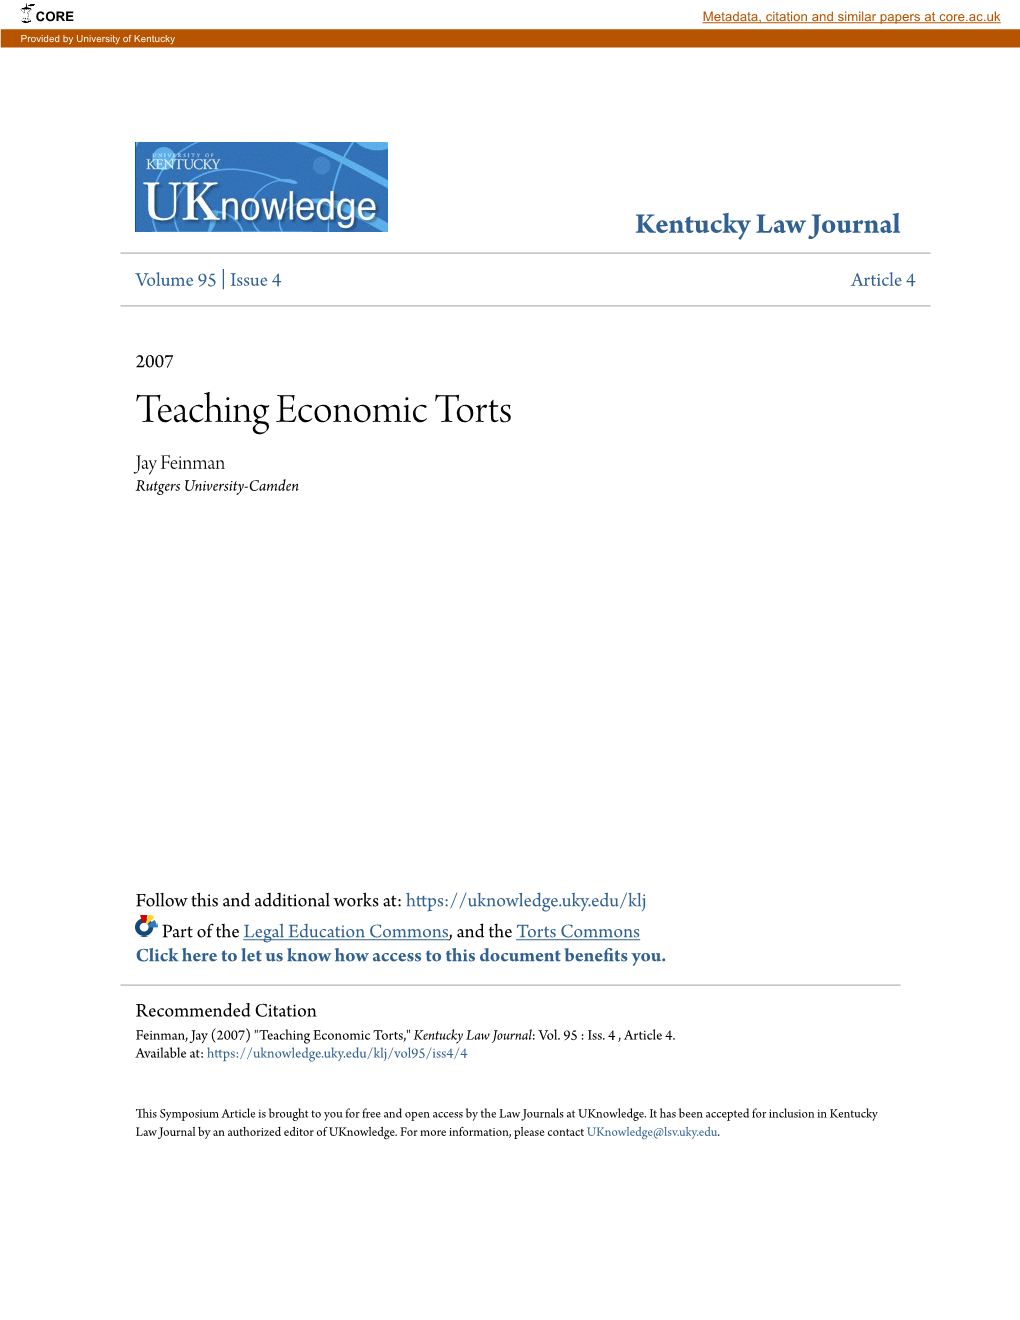 Teaching Economic Torts Jay Feinman Rutgers University-Camden